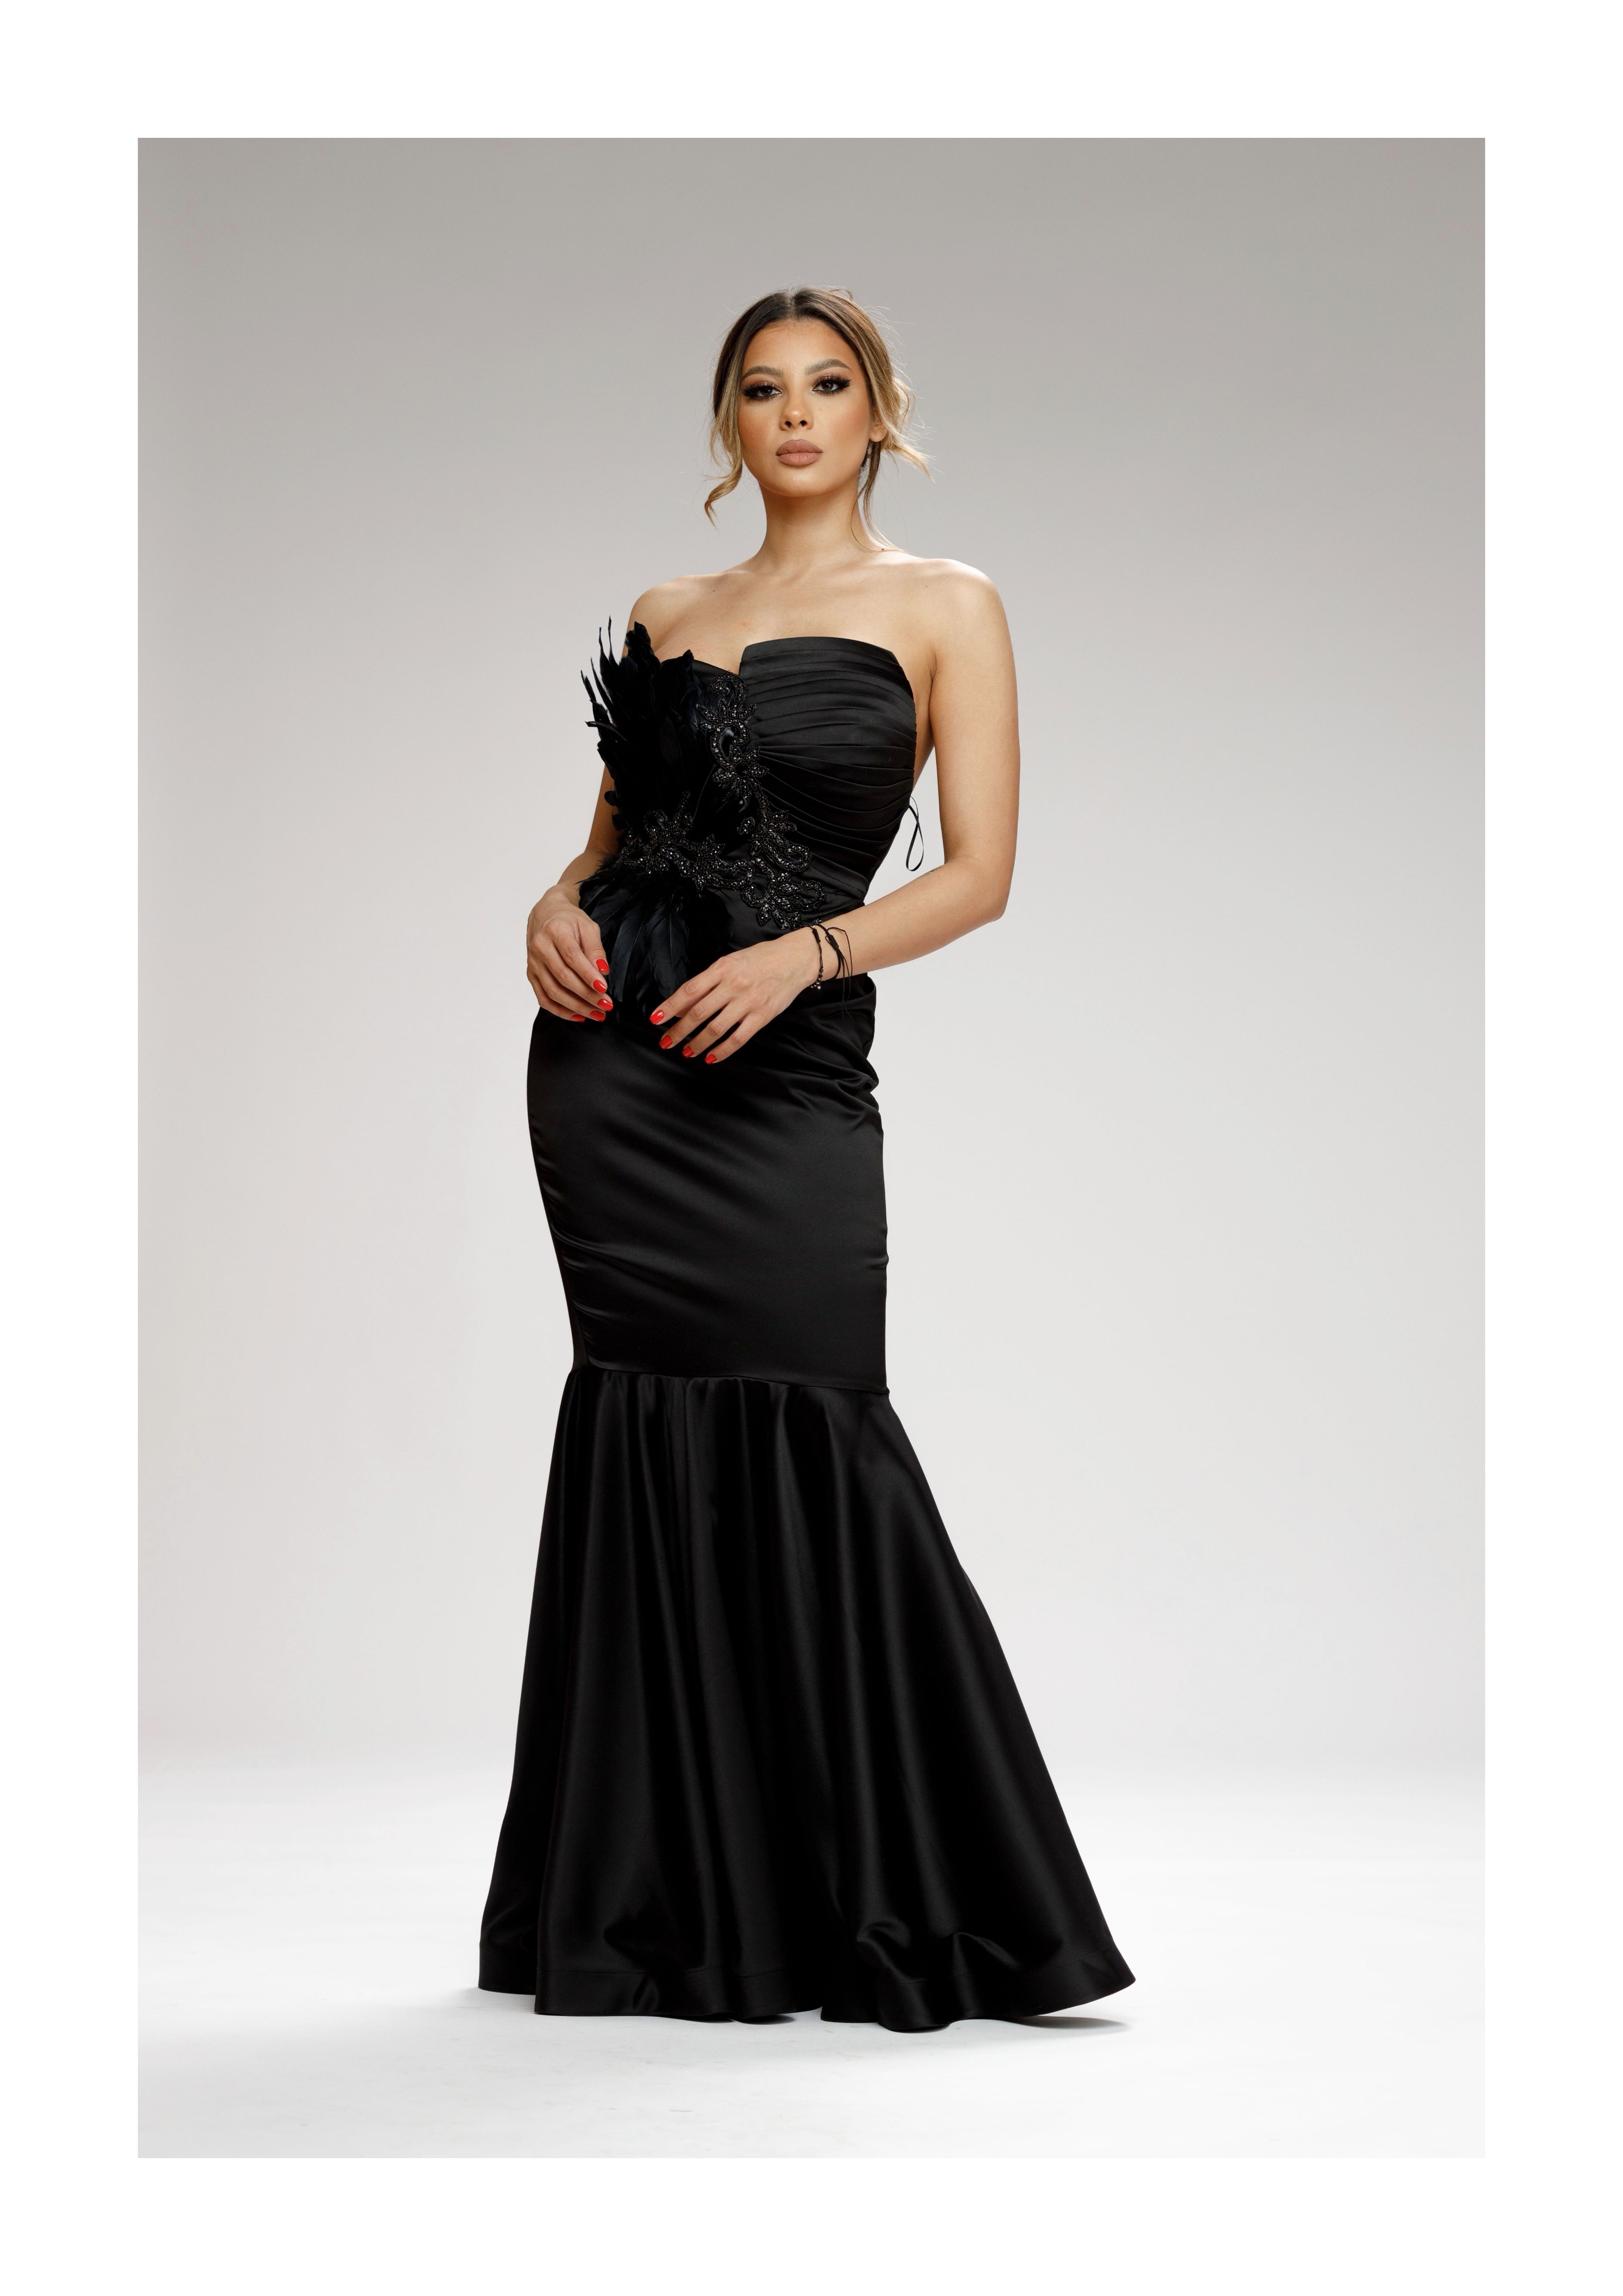 Catalea Black Dress